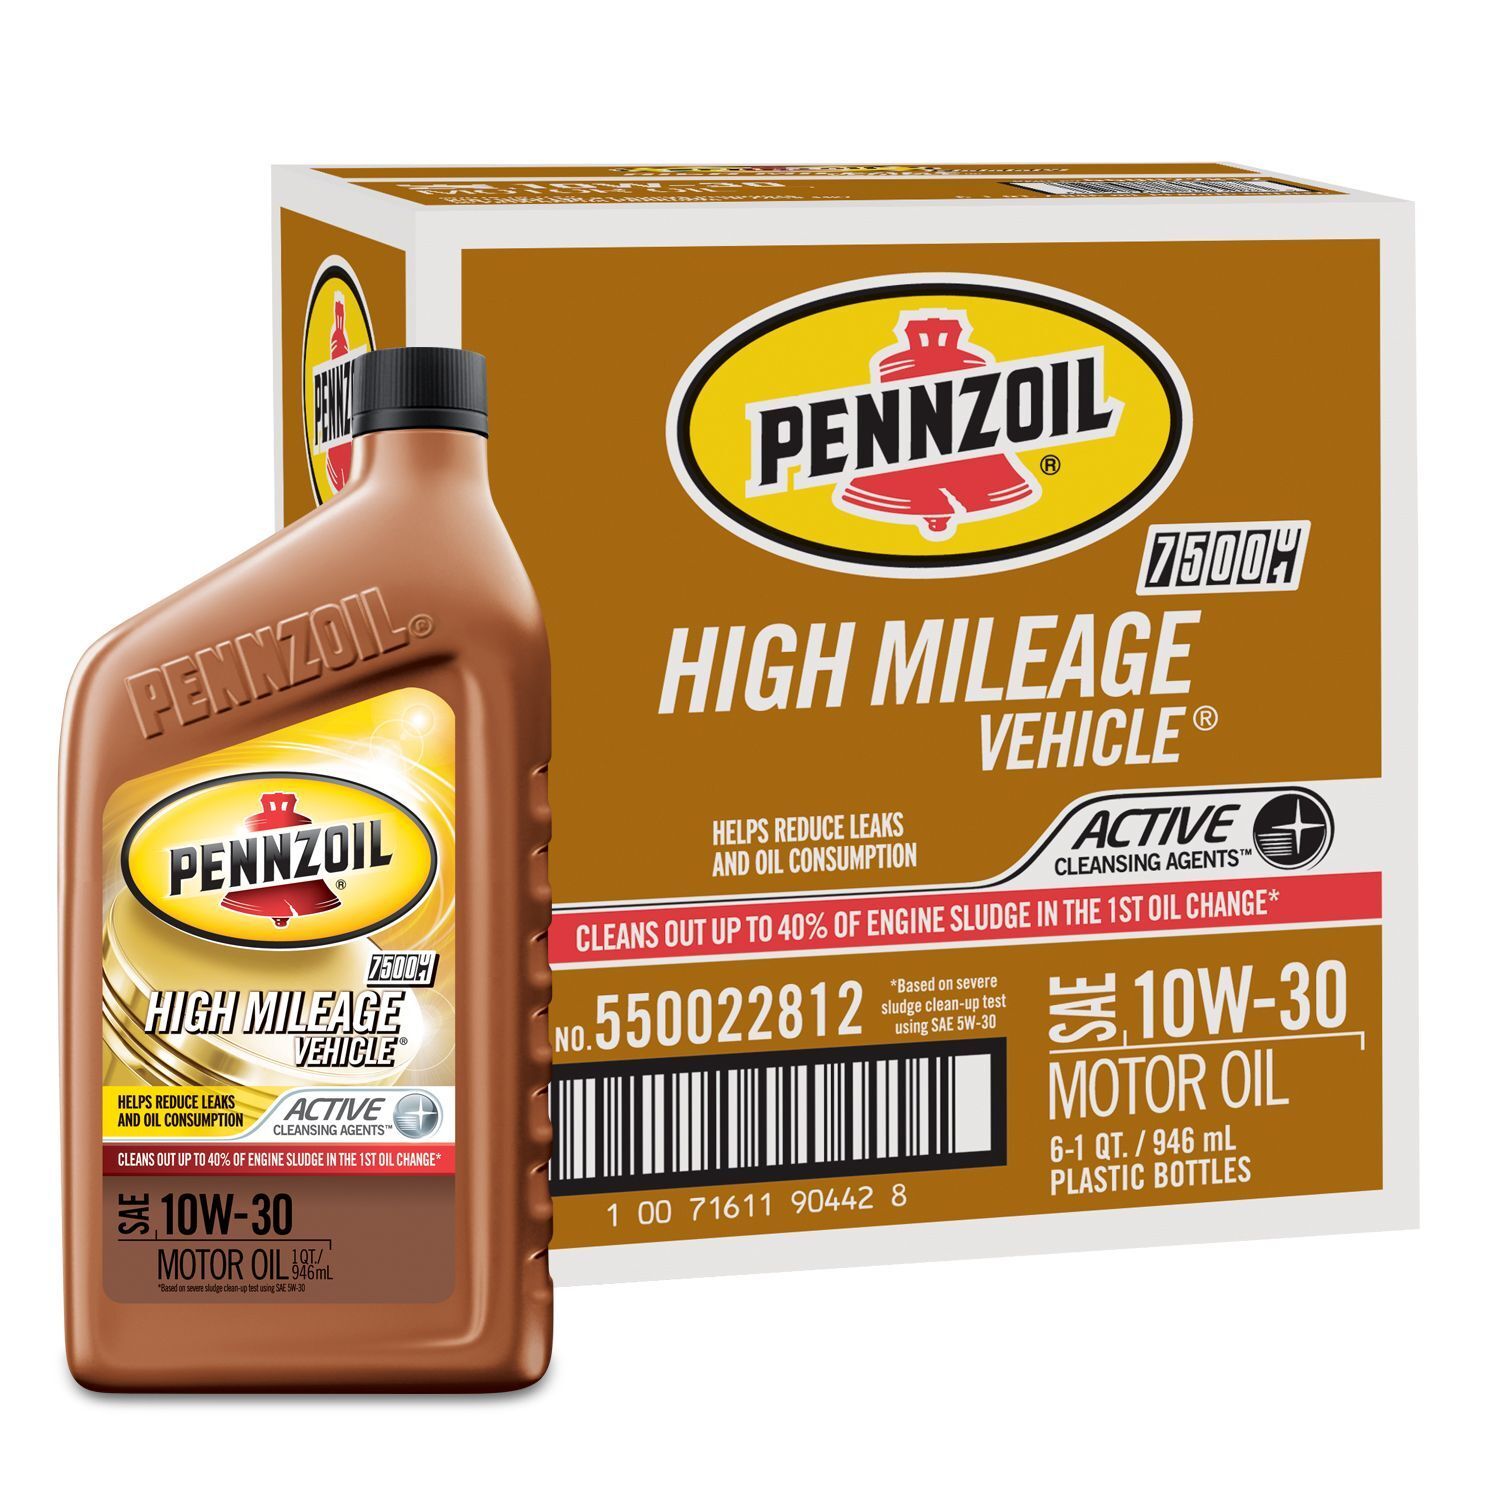 NEW Pennzoil High Mileage Vehicle 10W-40 Motor Oil - 1 Quart Bottles - 6 Pack  